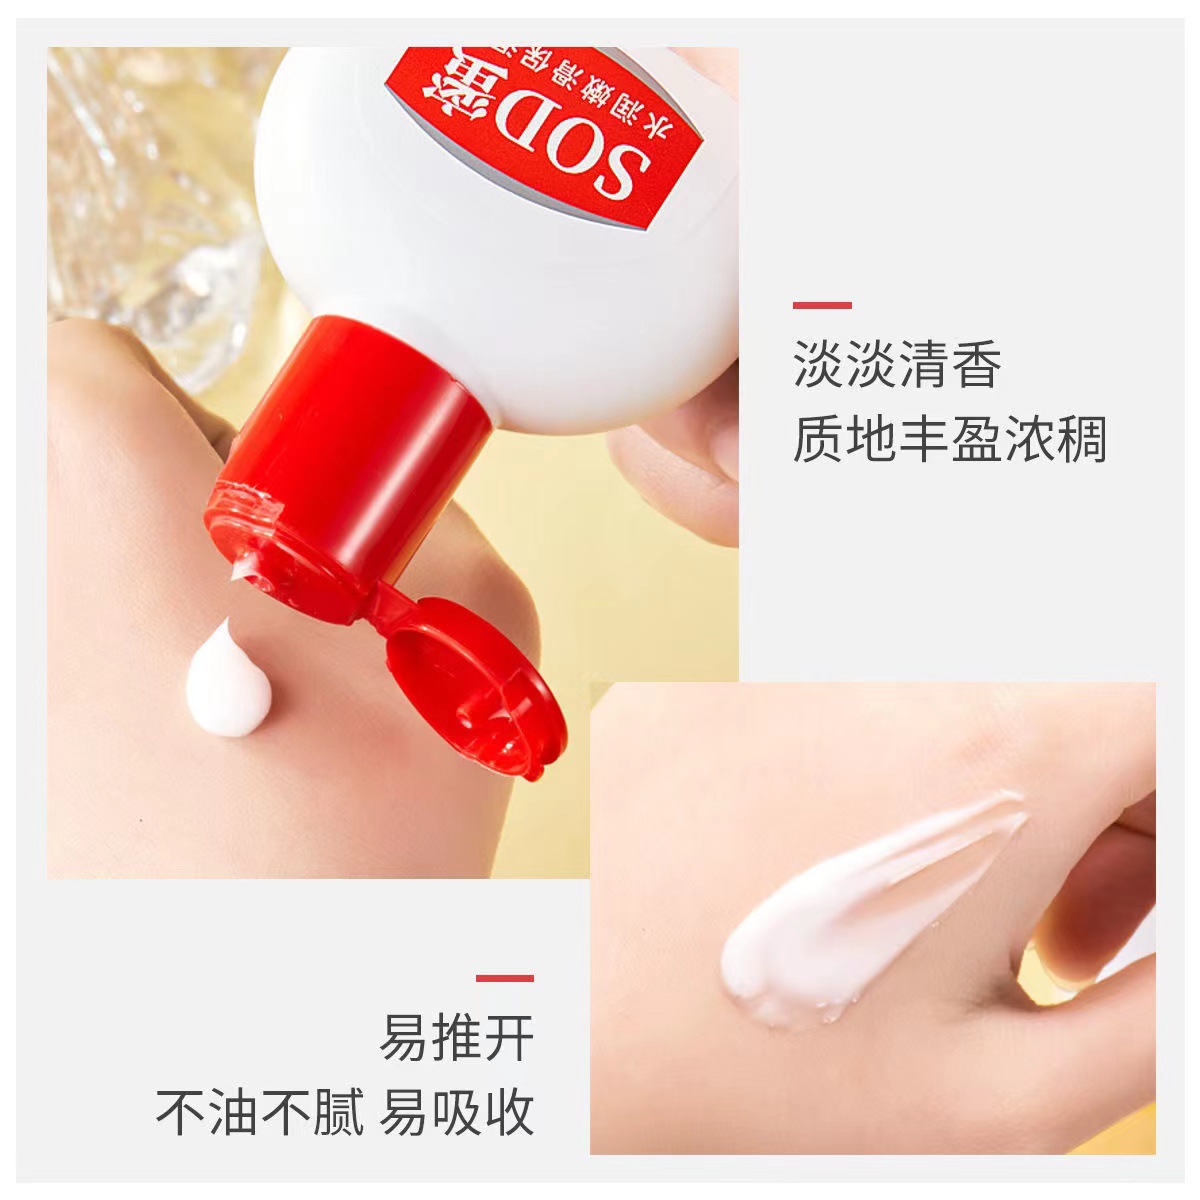 sod Honey Vitamin e Milk Moisturizing face cream Horse oil Hand Cream Body Cream Skin care Moisturizing SOD dense wholesale